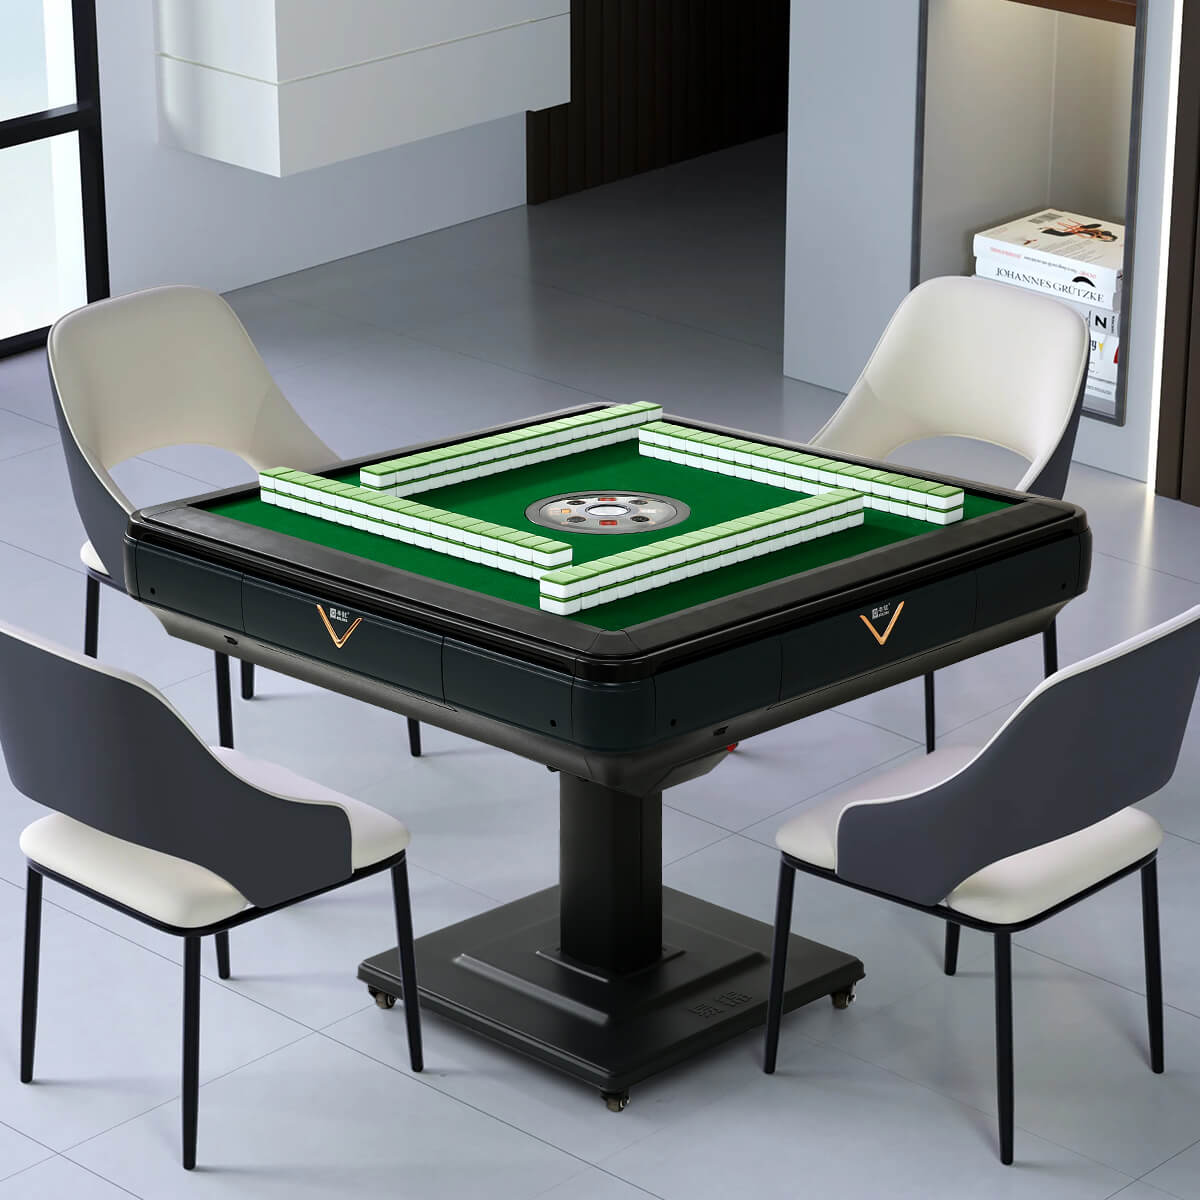 Autotable - an online mahjong table